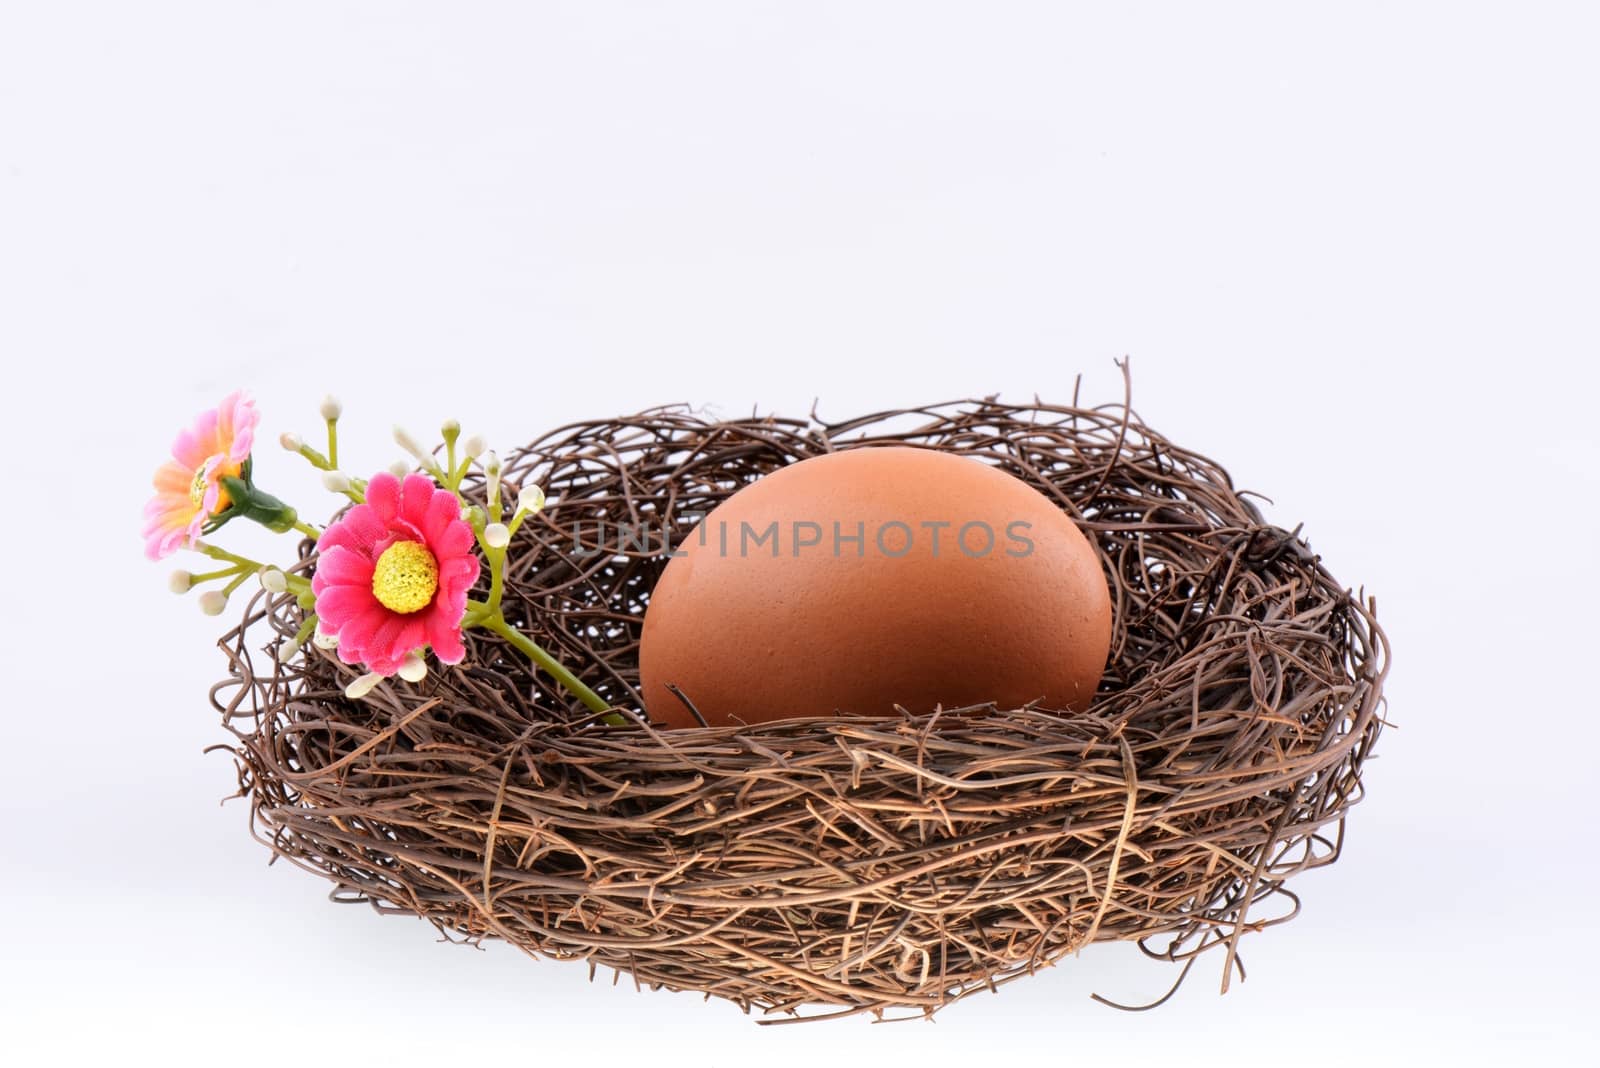 Bird's nest with an egg by bbbar